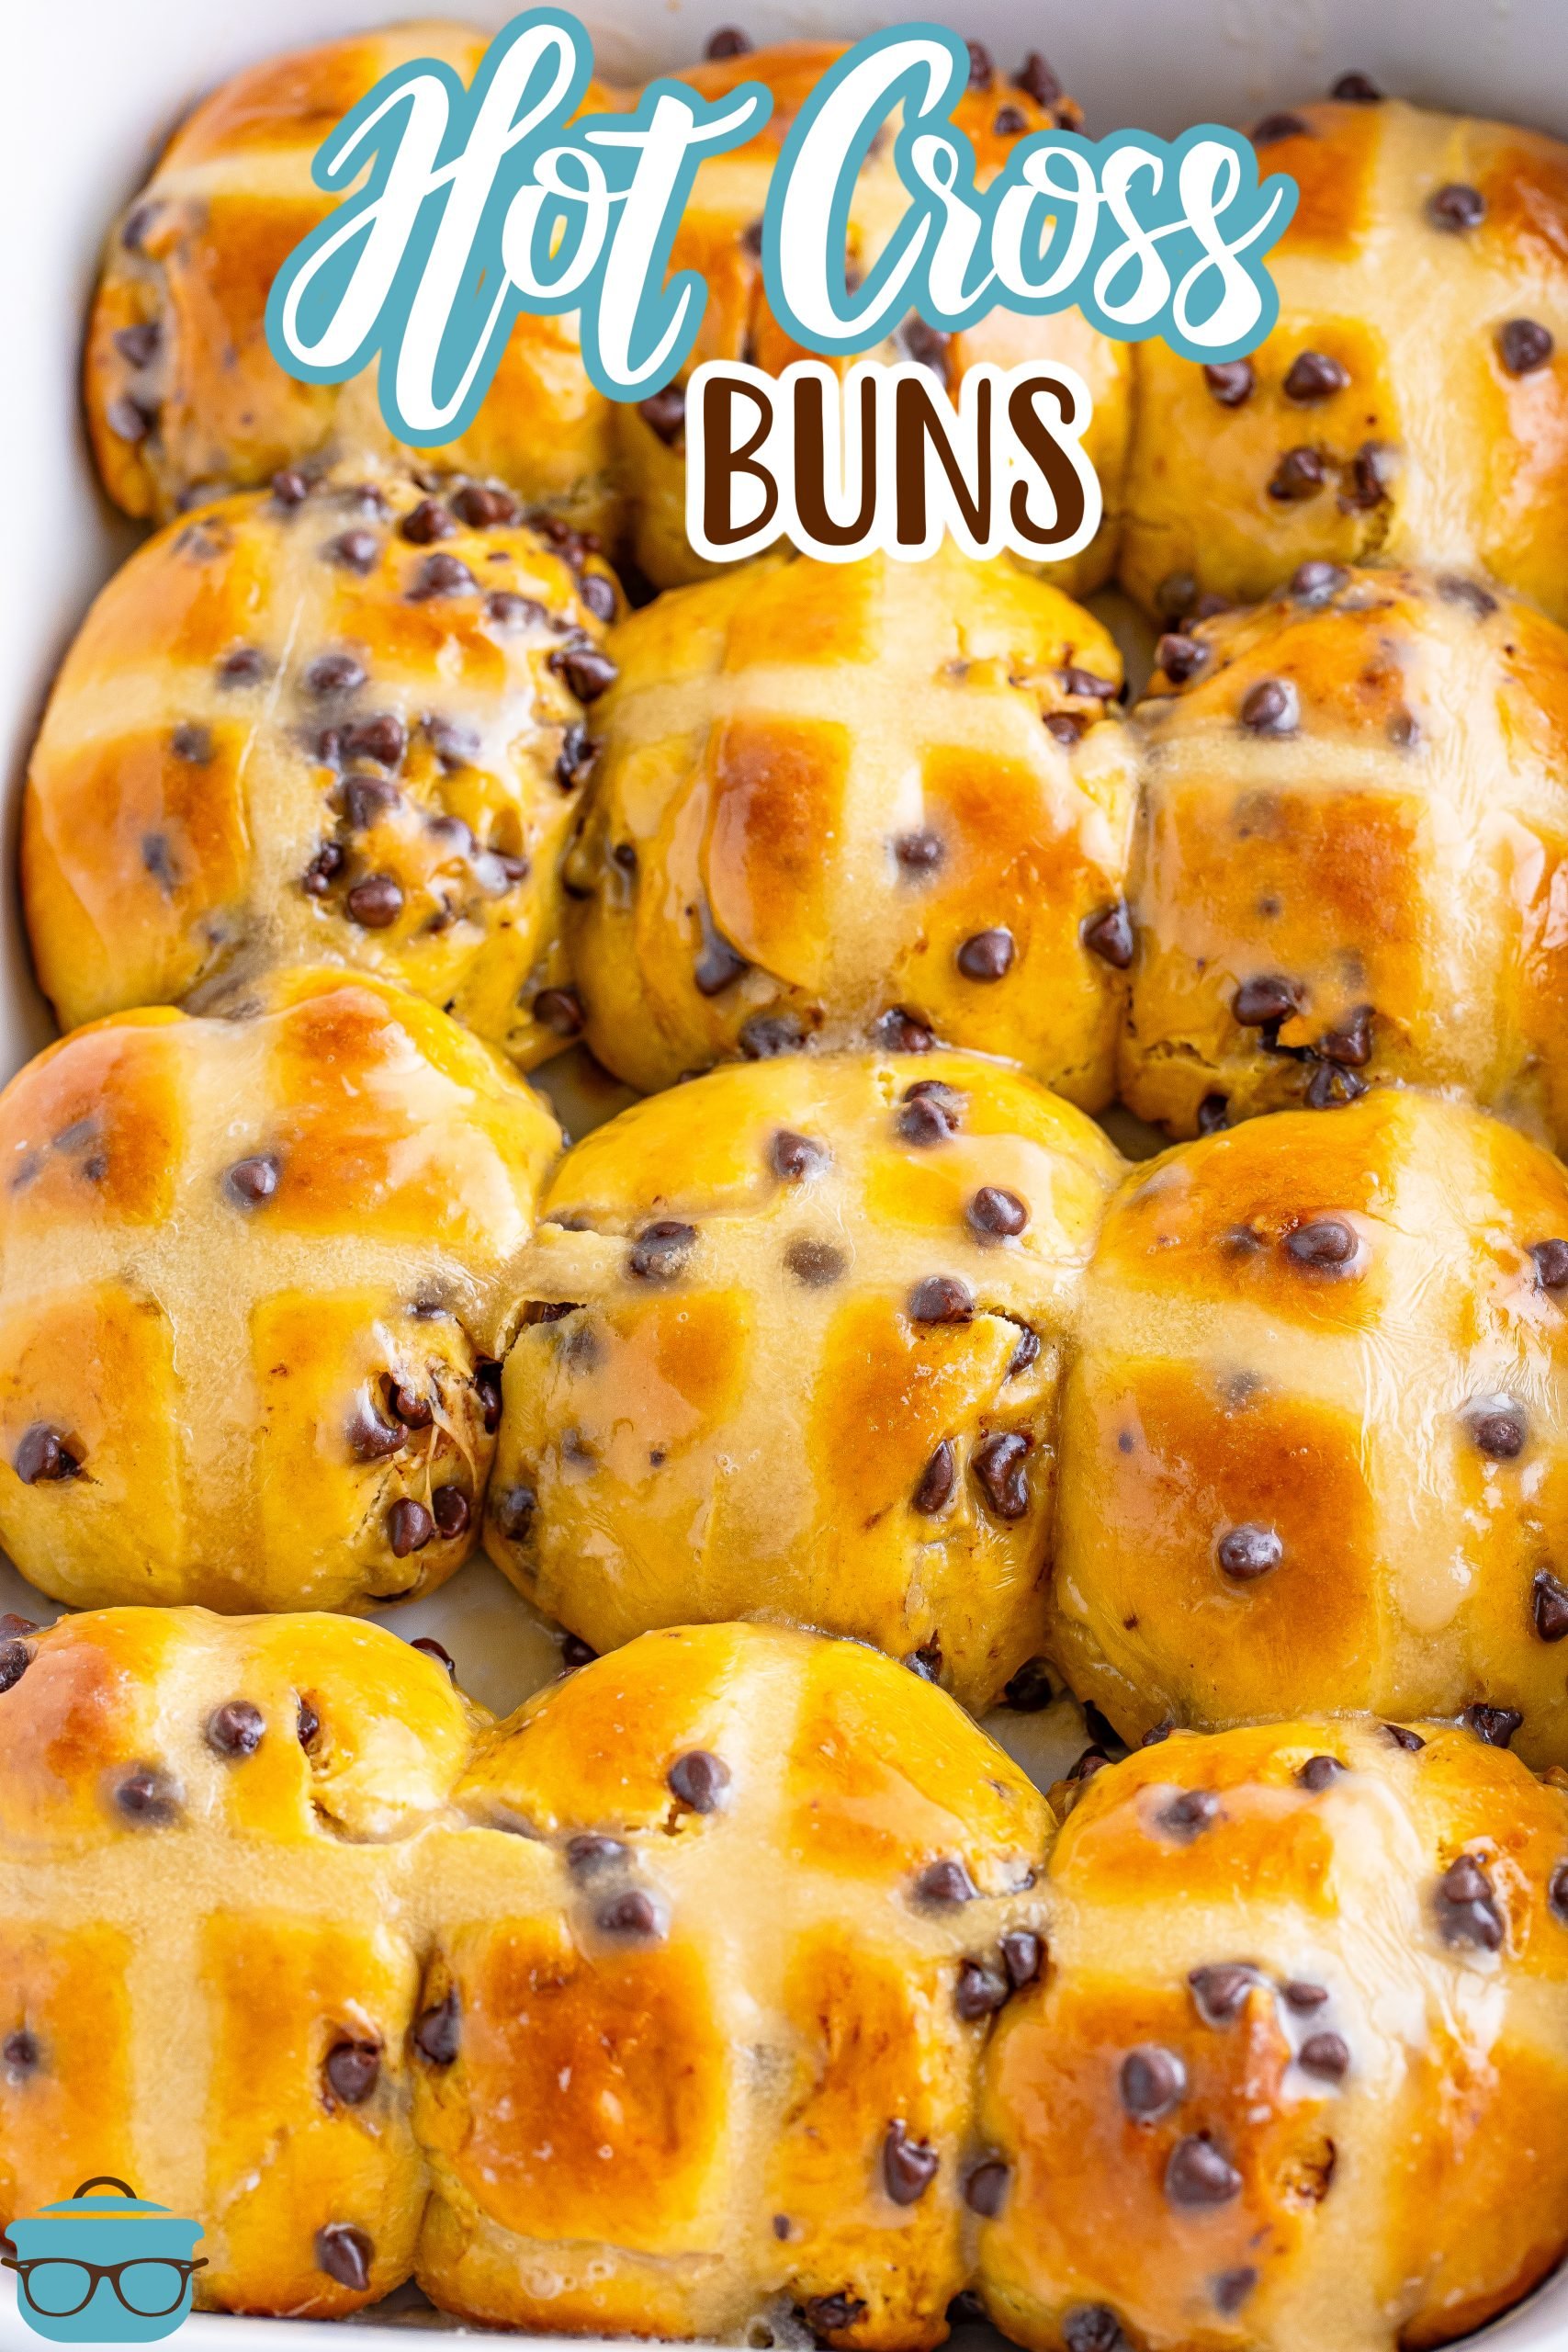 A batch of Hot Cross Buns in a baking dish.